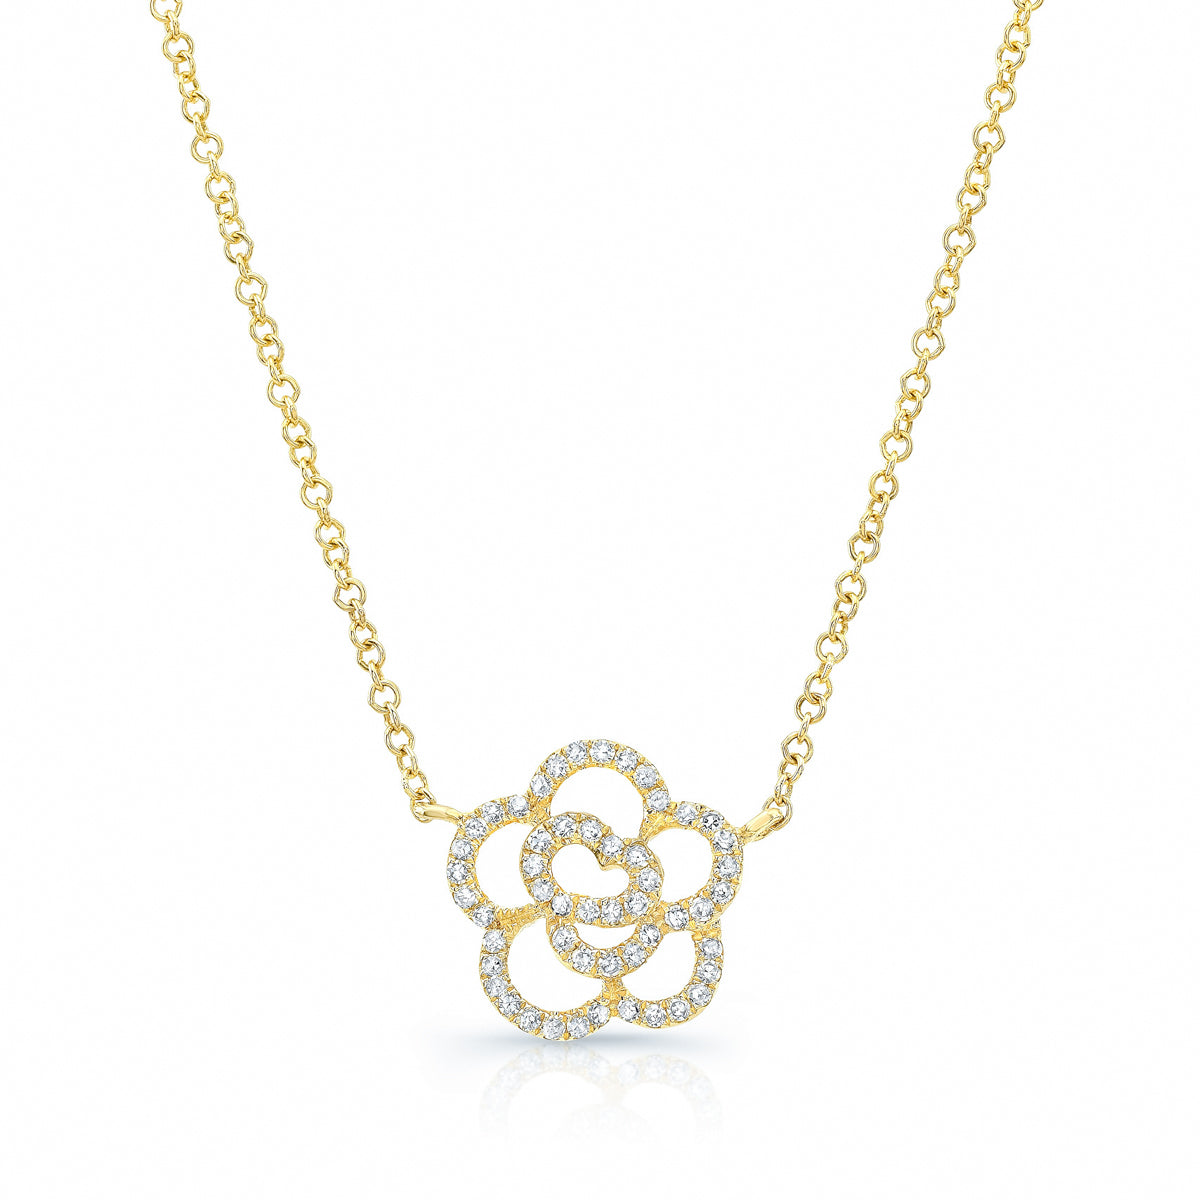 Diamond Open Flower Necklace